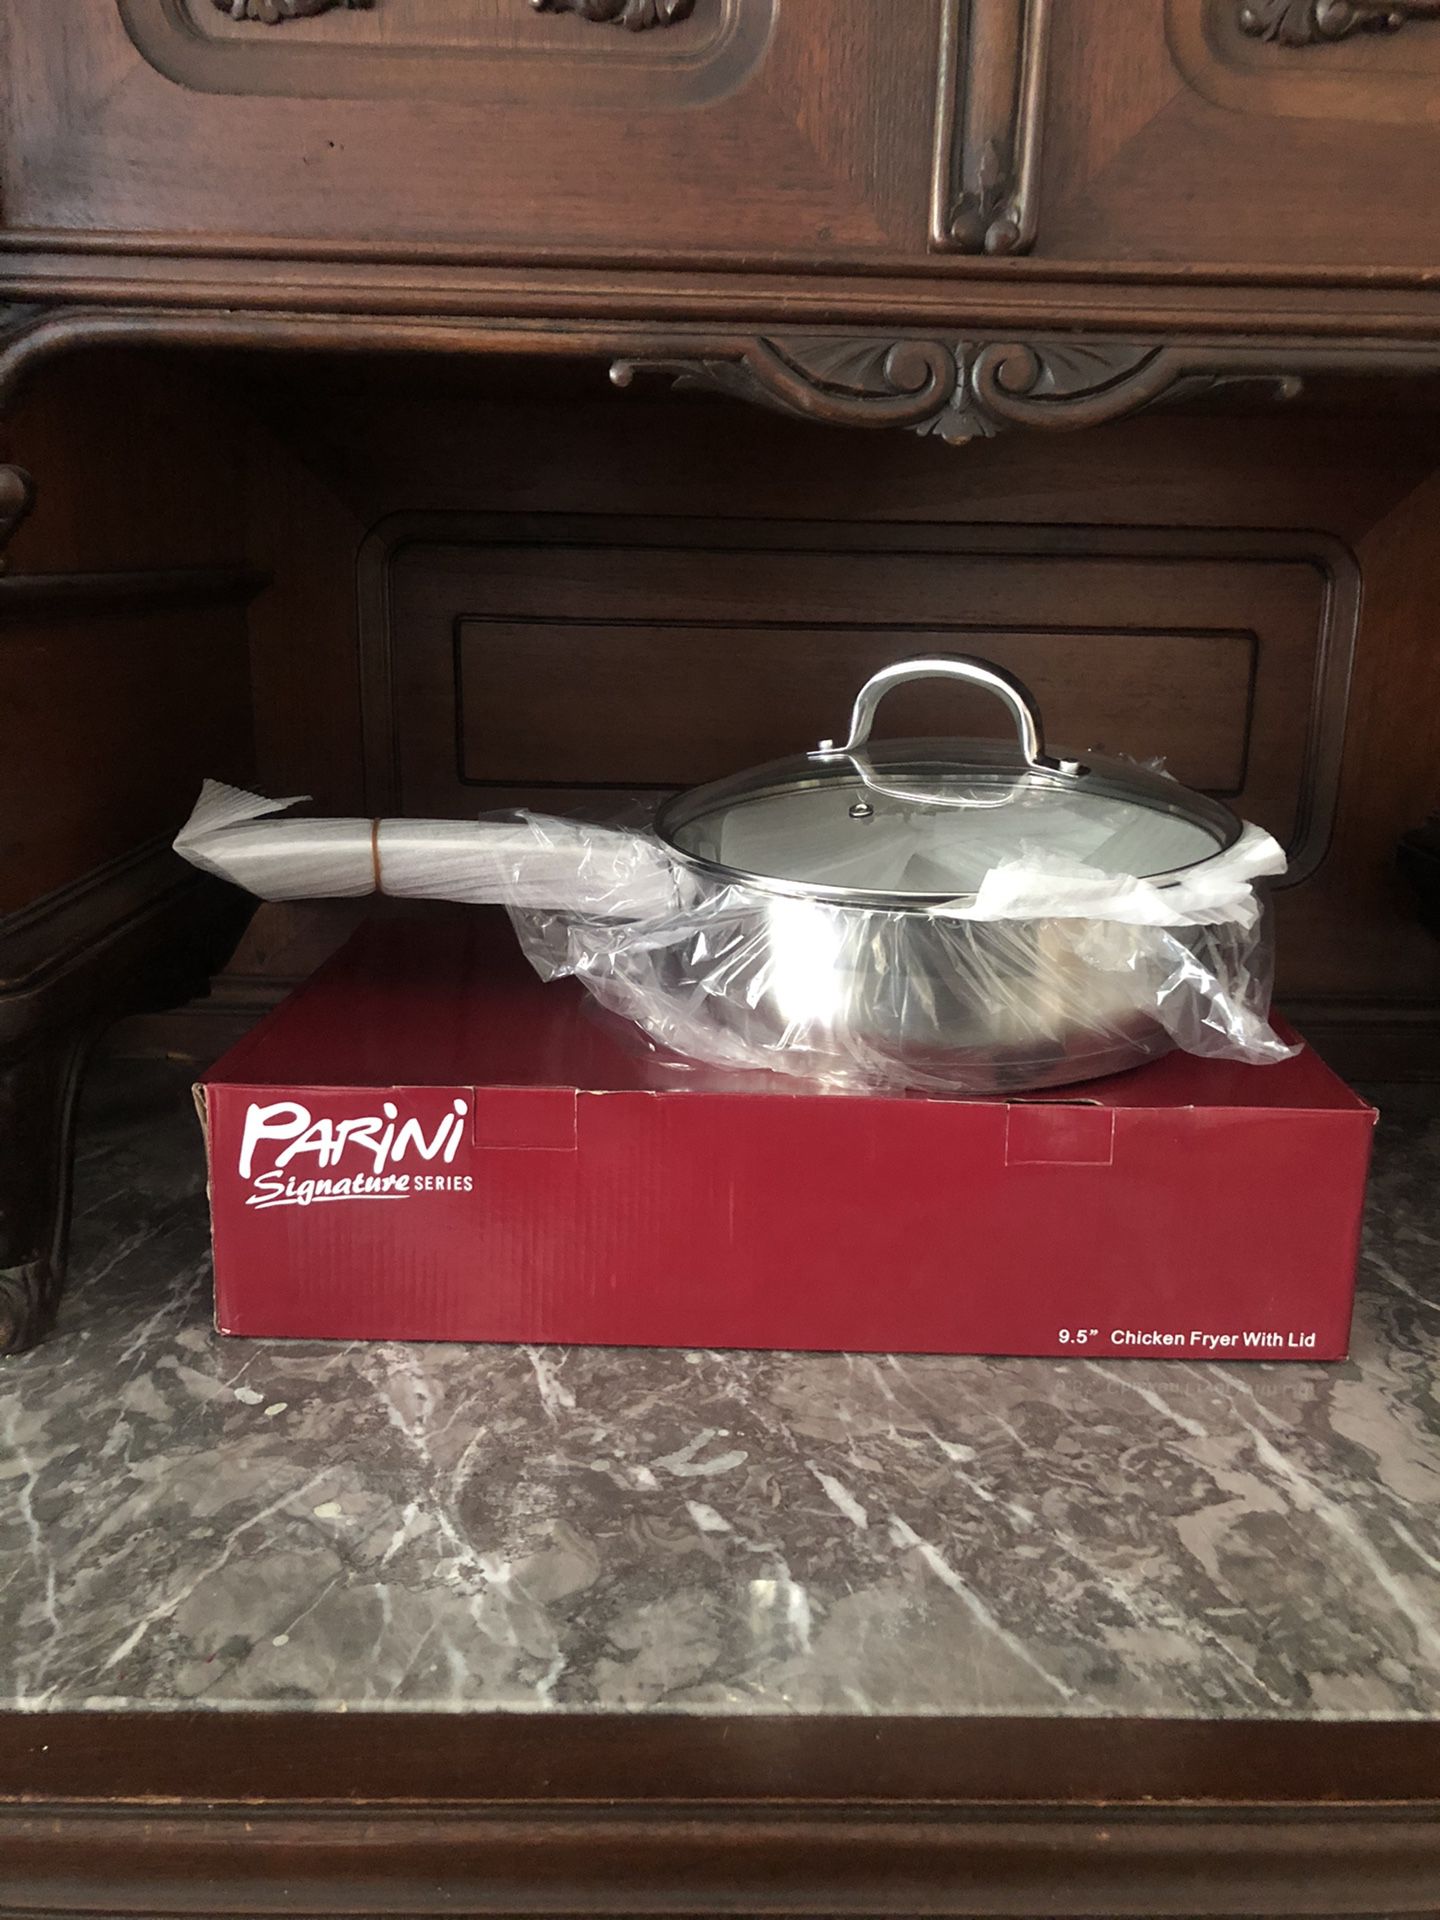 Parini Signature Series Stainless Steel 9.5” Chicken Fryer